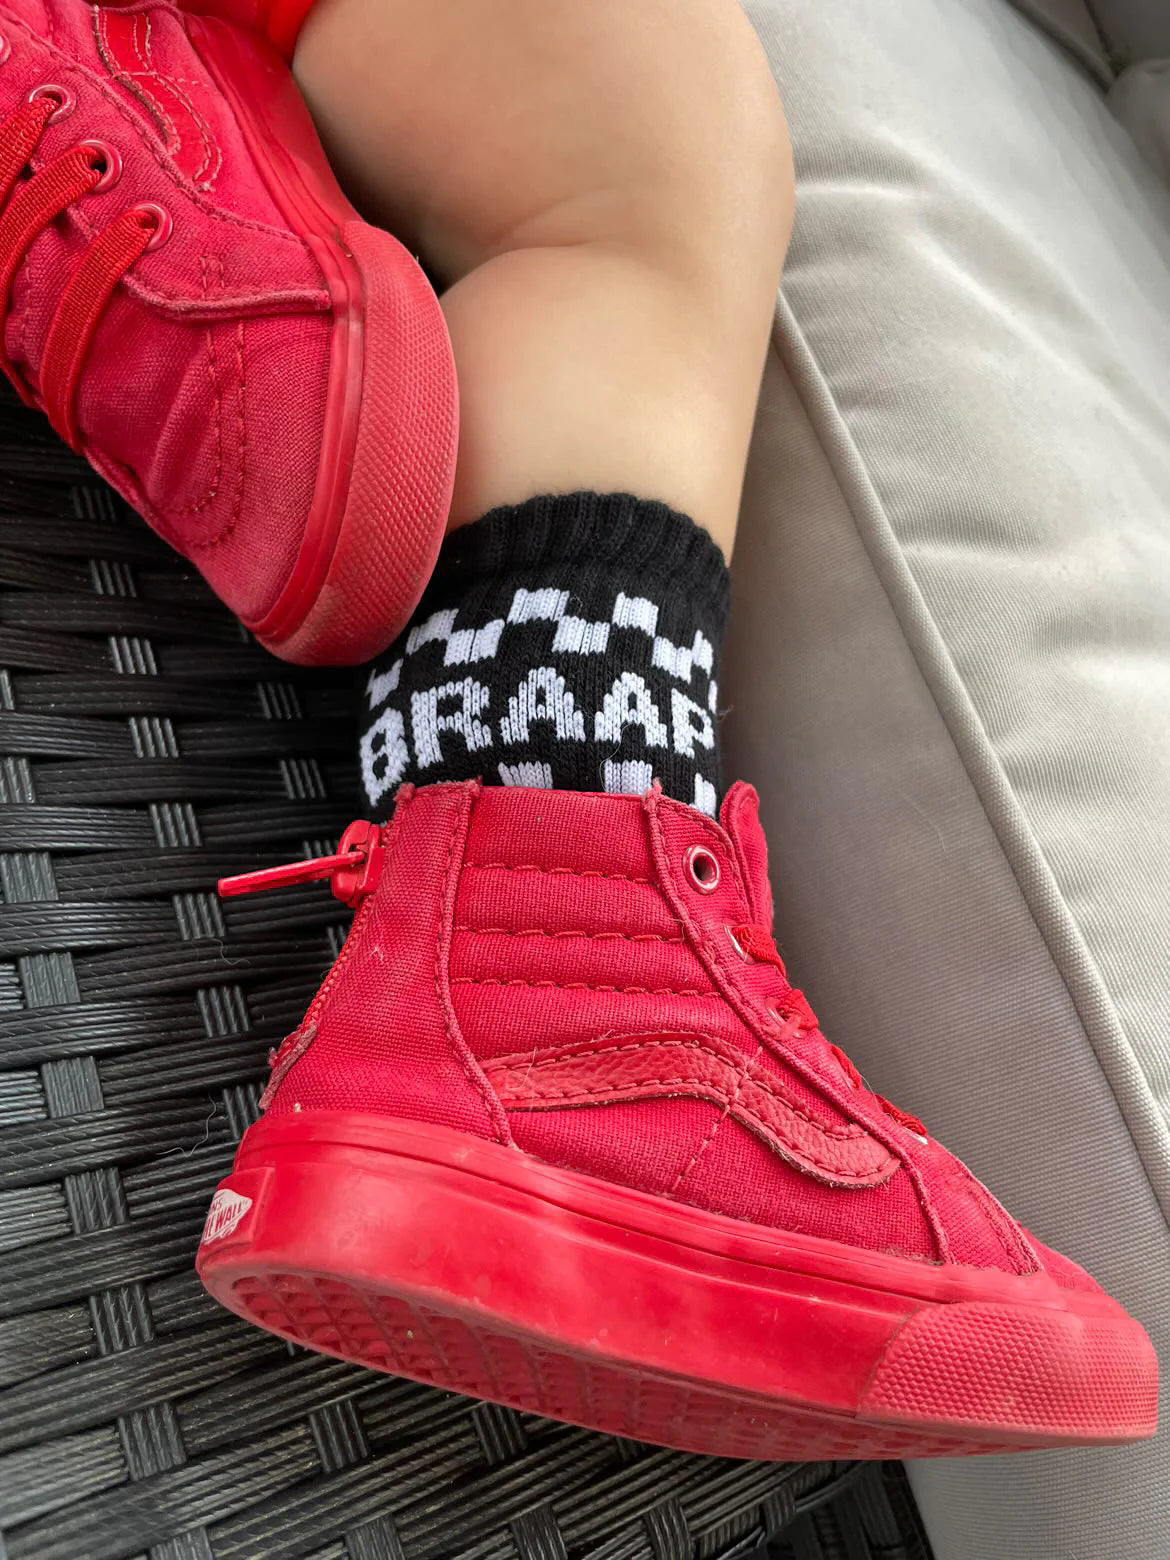 BRAAP Socks